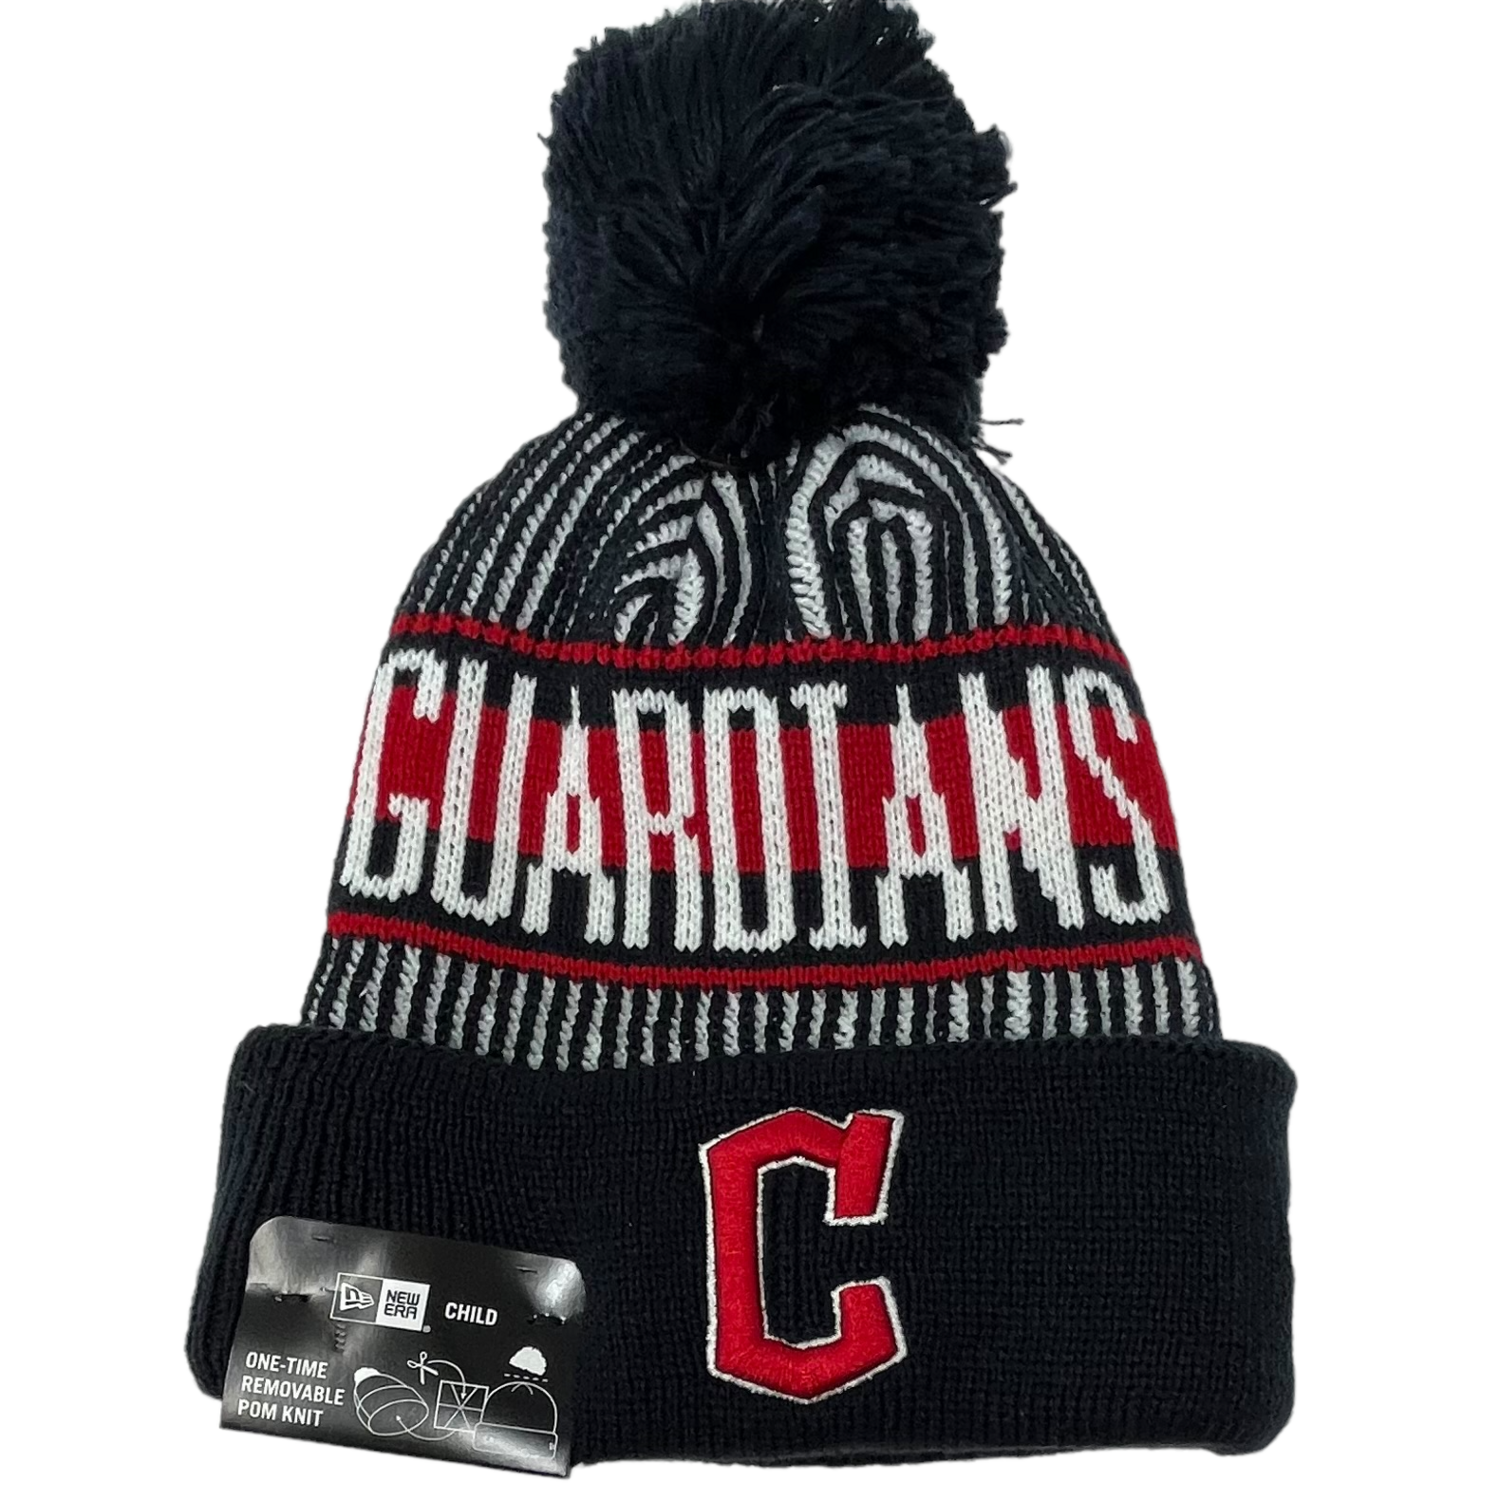 Cleveland Guardians Child New Era Cuffed Pom Knit Hat